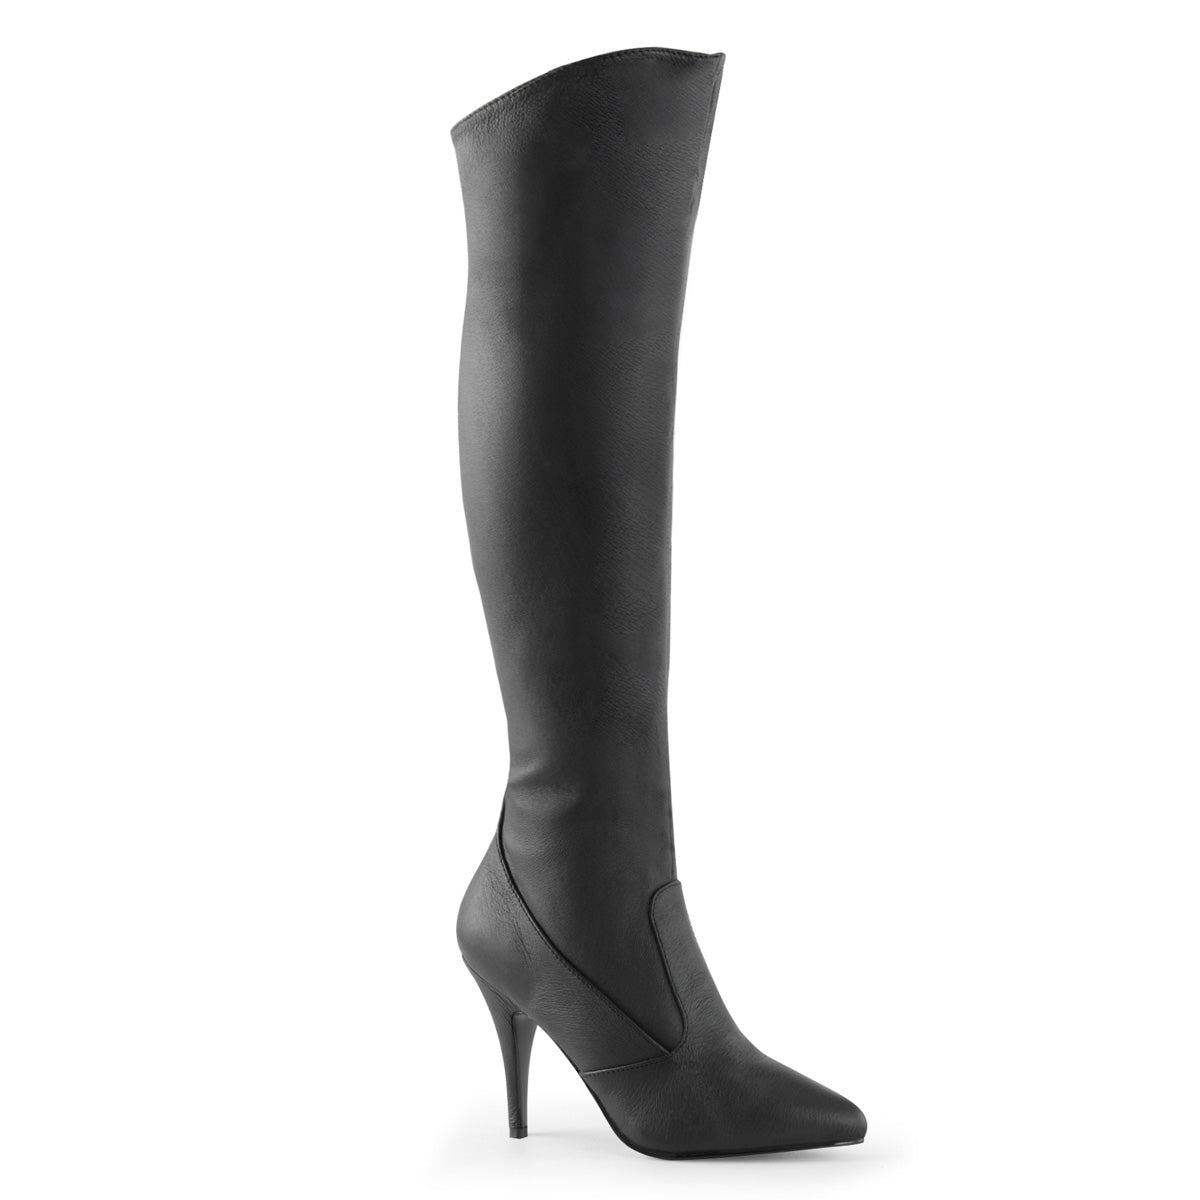 Canity-2013 Knee Heights 4 "каблука черная кожаная фетинская обувь